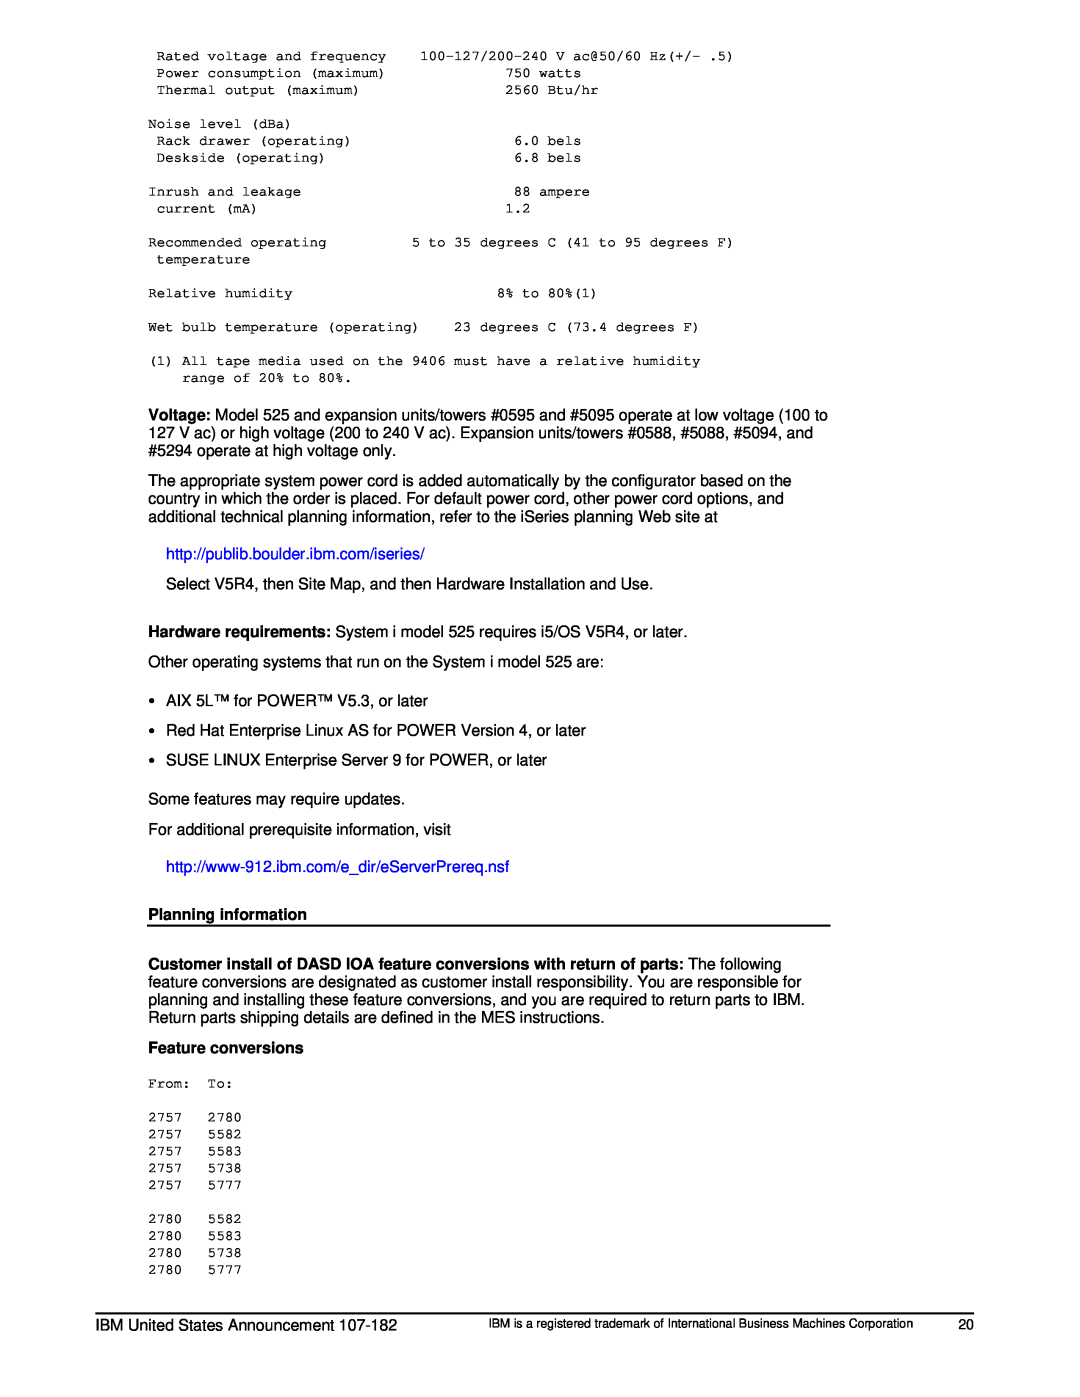 IBM 525 Planning information, Feature conversions, 100-127/200-240 V ac@50/60 Hz+, Btu/hr, Wet bulb temperature operating 